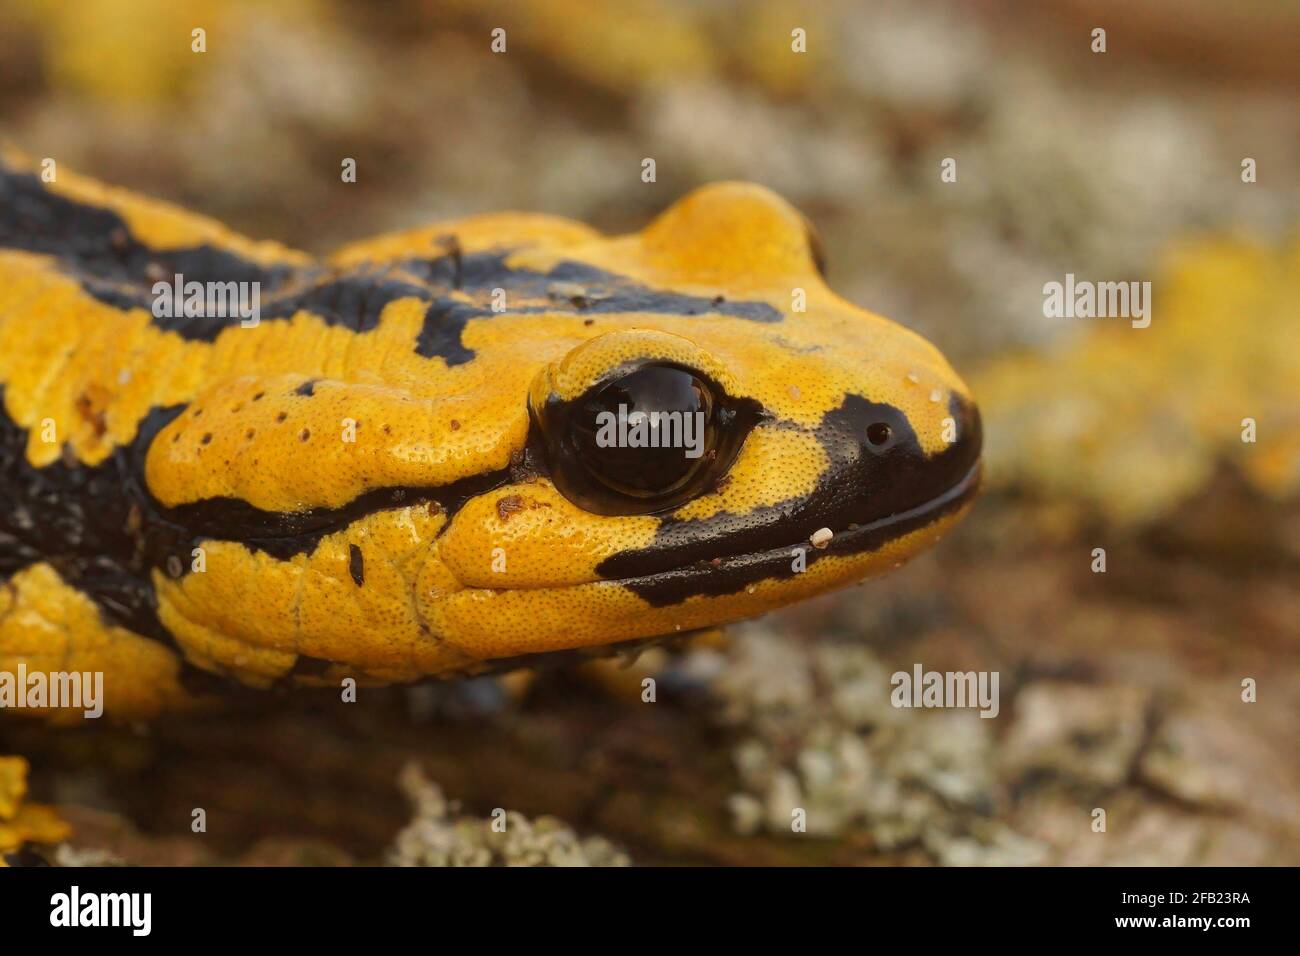 Closeup shot of a yellow-colored Tendi fire salamander, Salamandra salamandra bernardezi on a stone Stock Photo